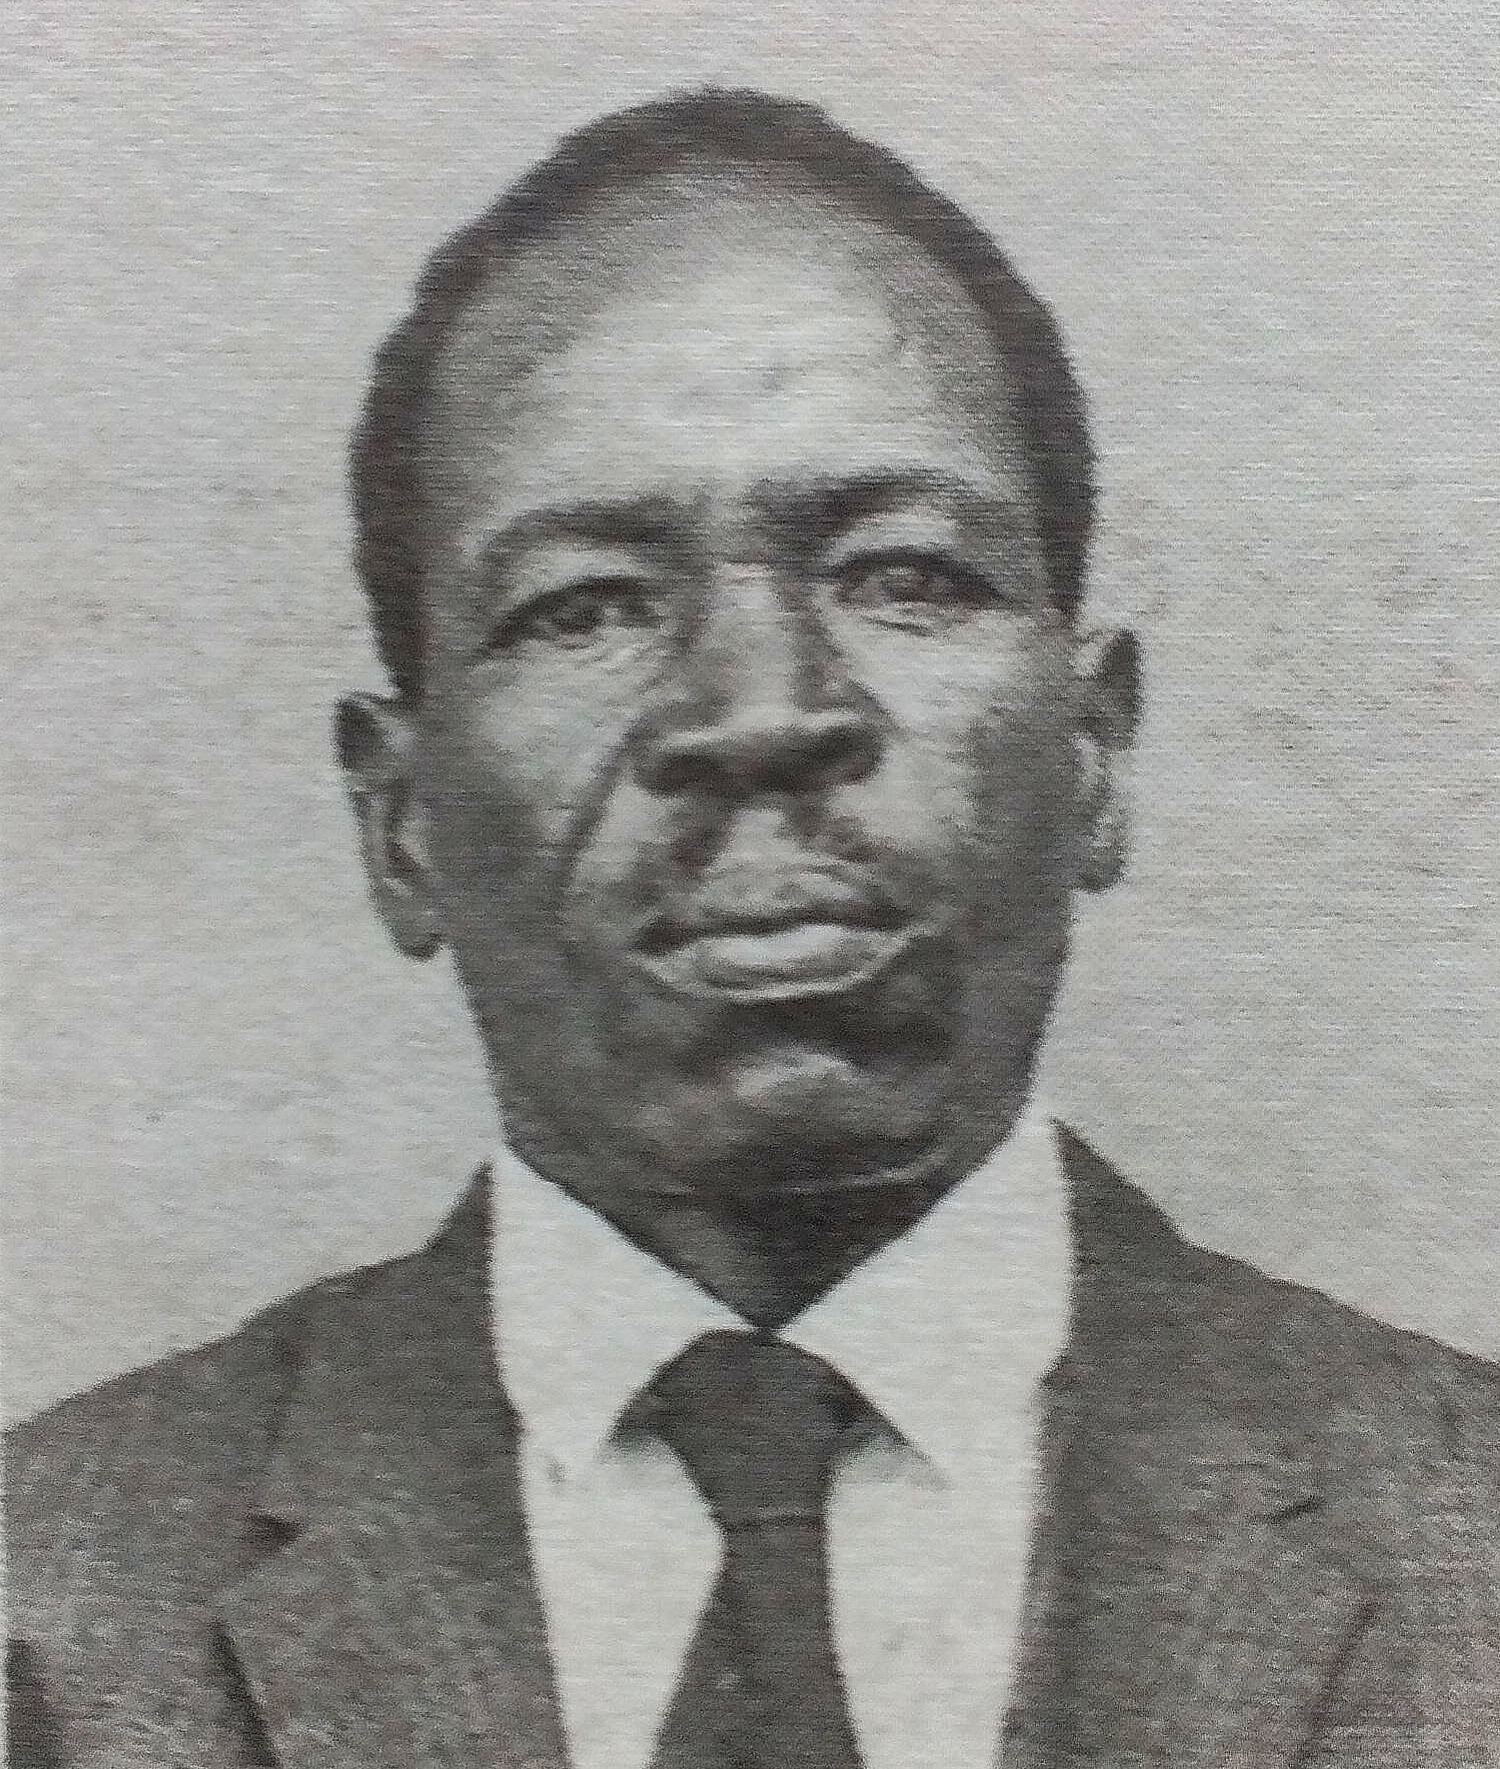 Obituary Image of Mzee Raphael Mwatembo Msagha